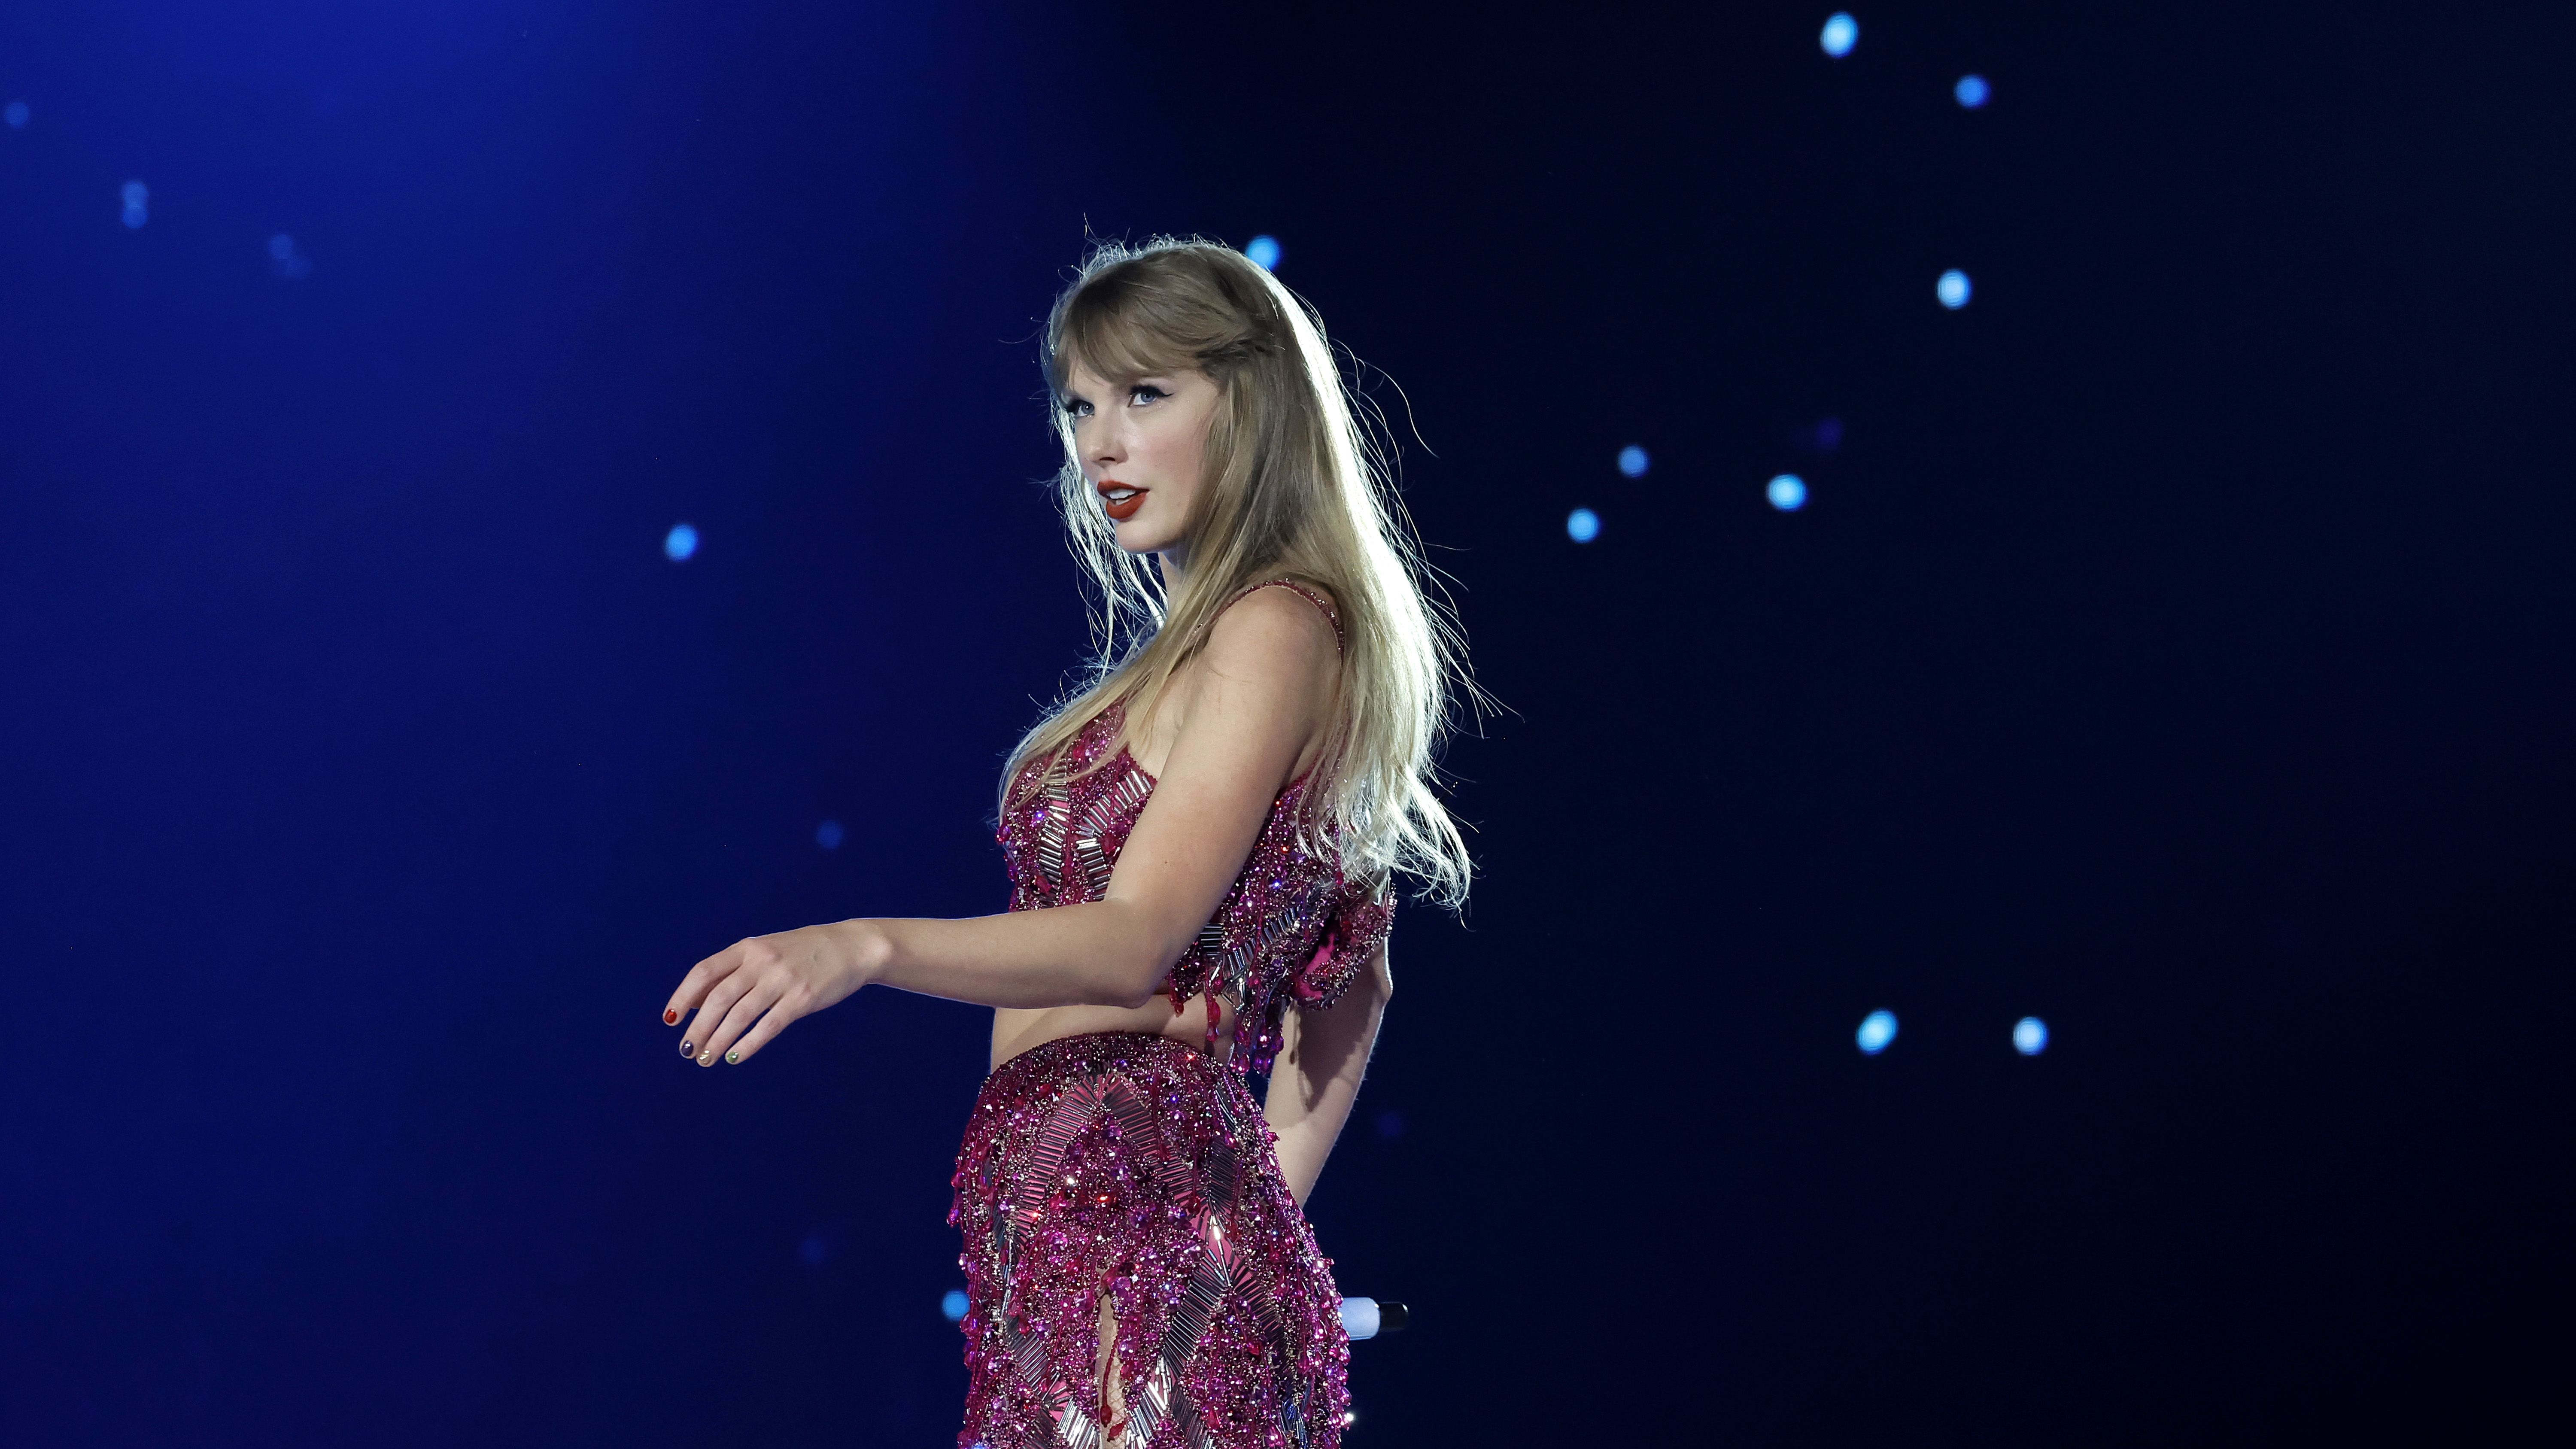 endgame taylor swift in 2023  Pretty lyrics, Taylor lyrics, Taylor swift  lyrics